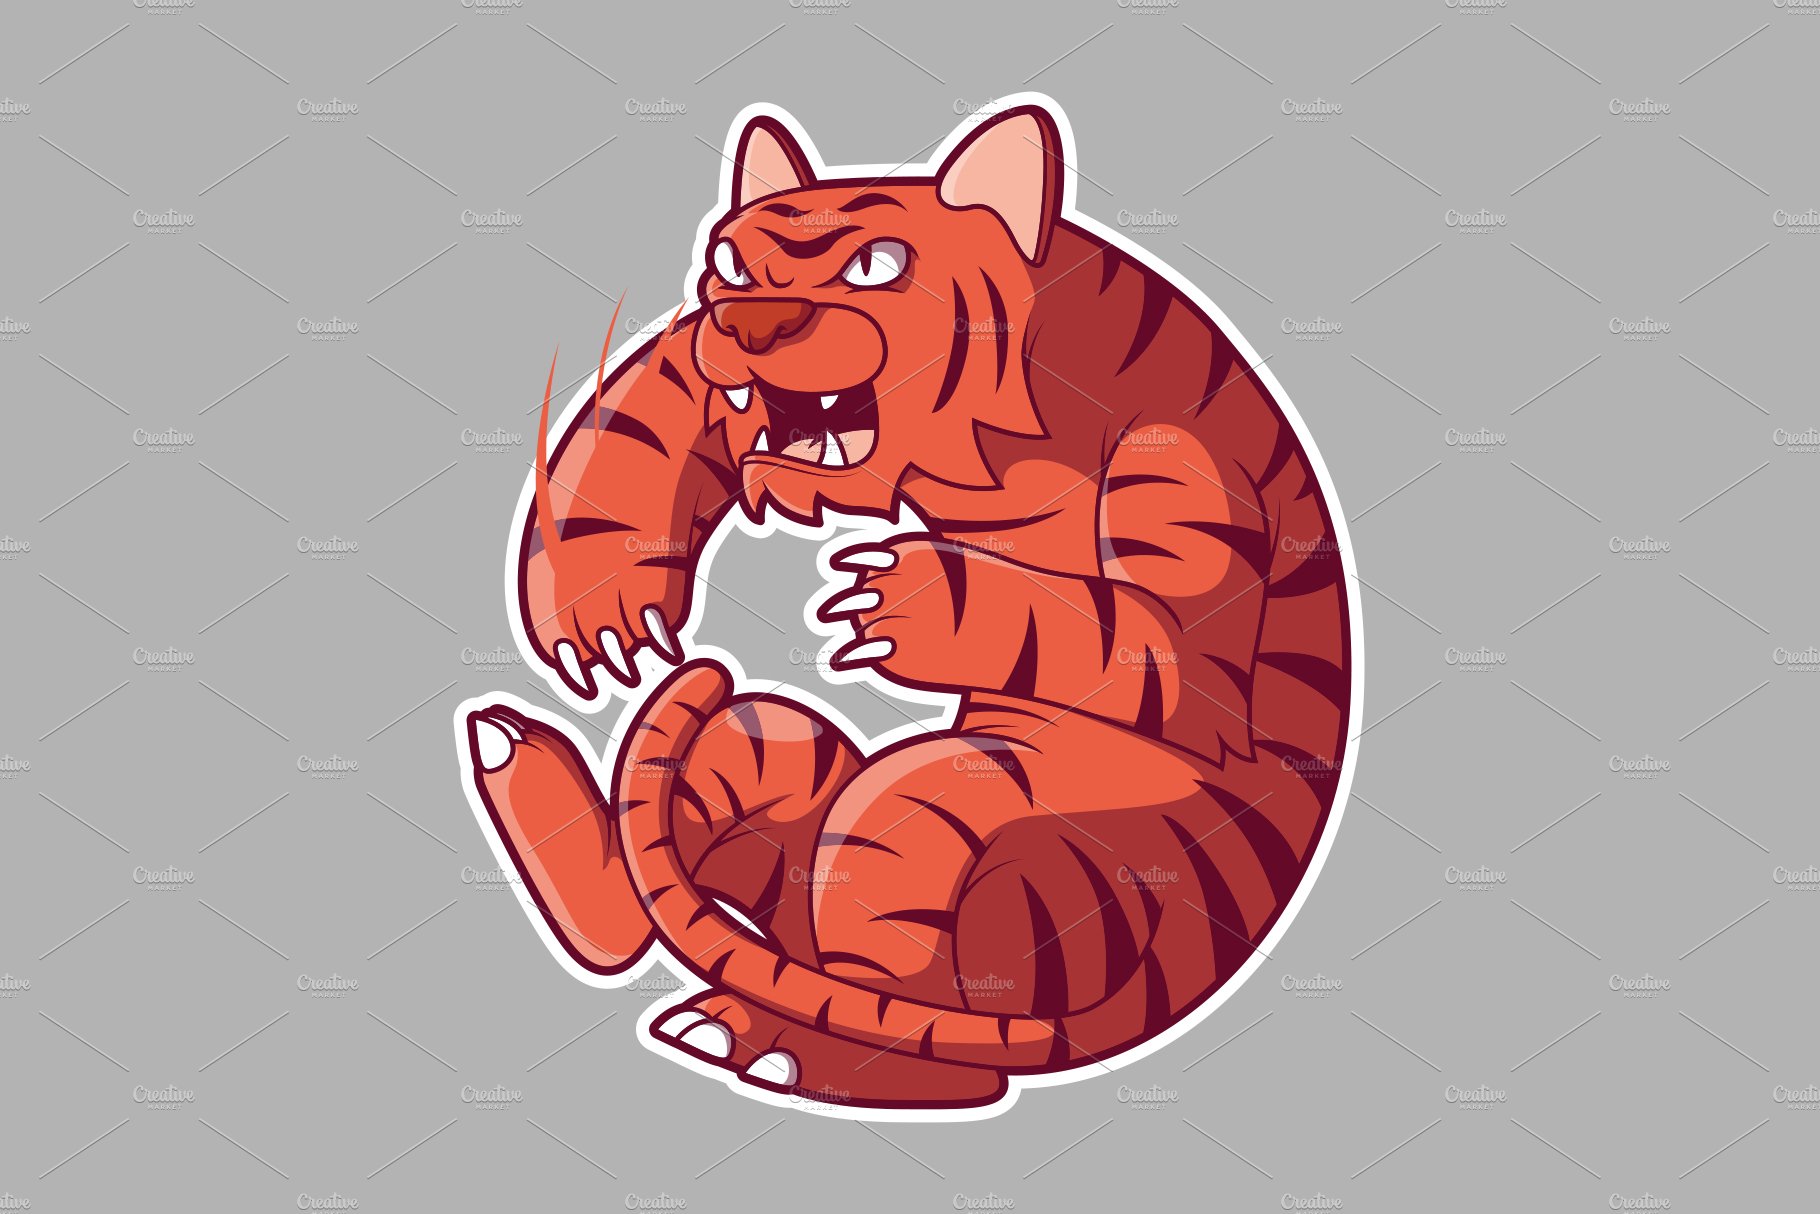 Orange Tiger cover image.